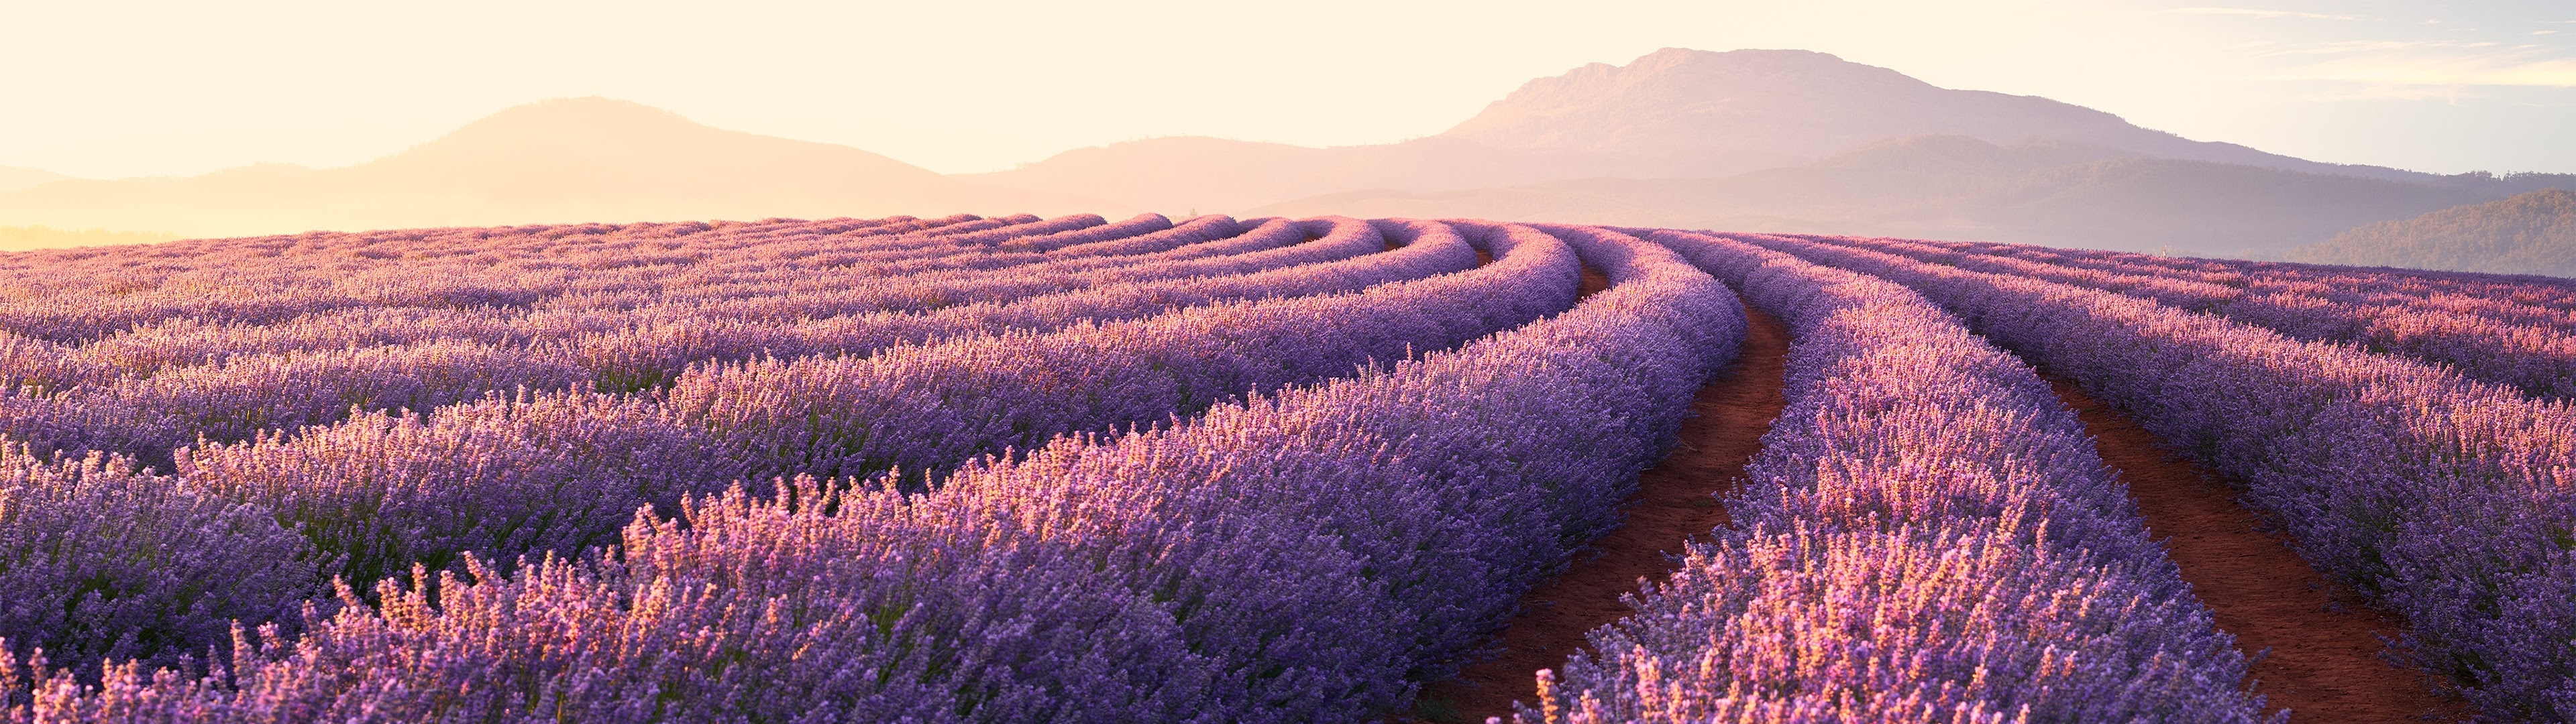 Flower lavender, Scenic sunrise, Nature's beauty, Wallpaper, 3840x1080 Dual Screen Desktop